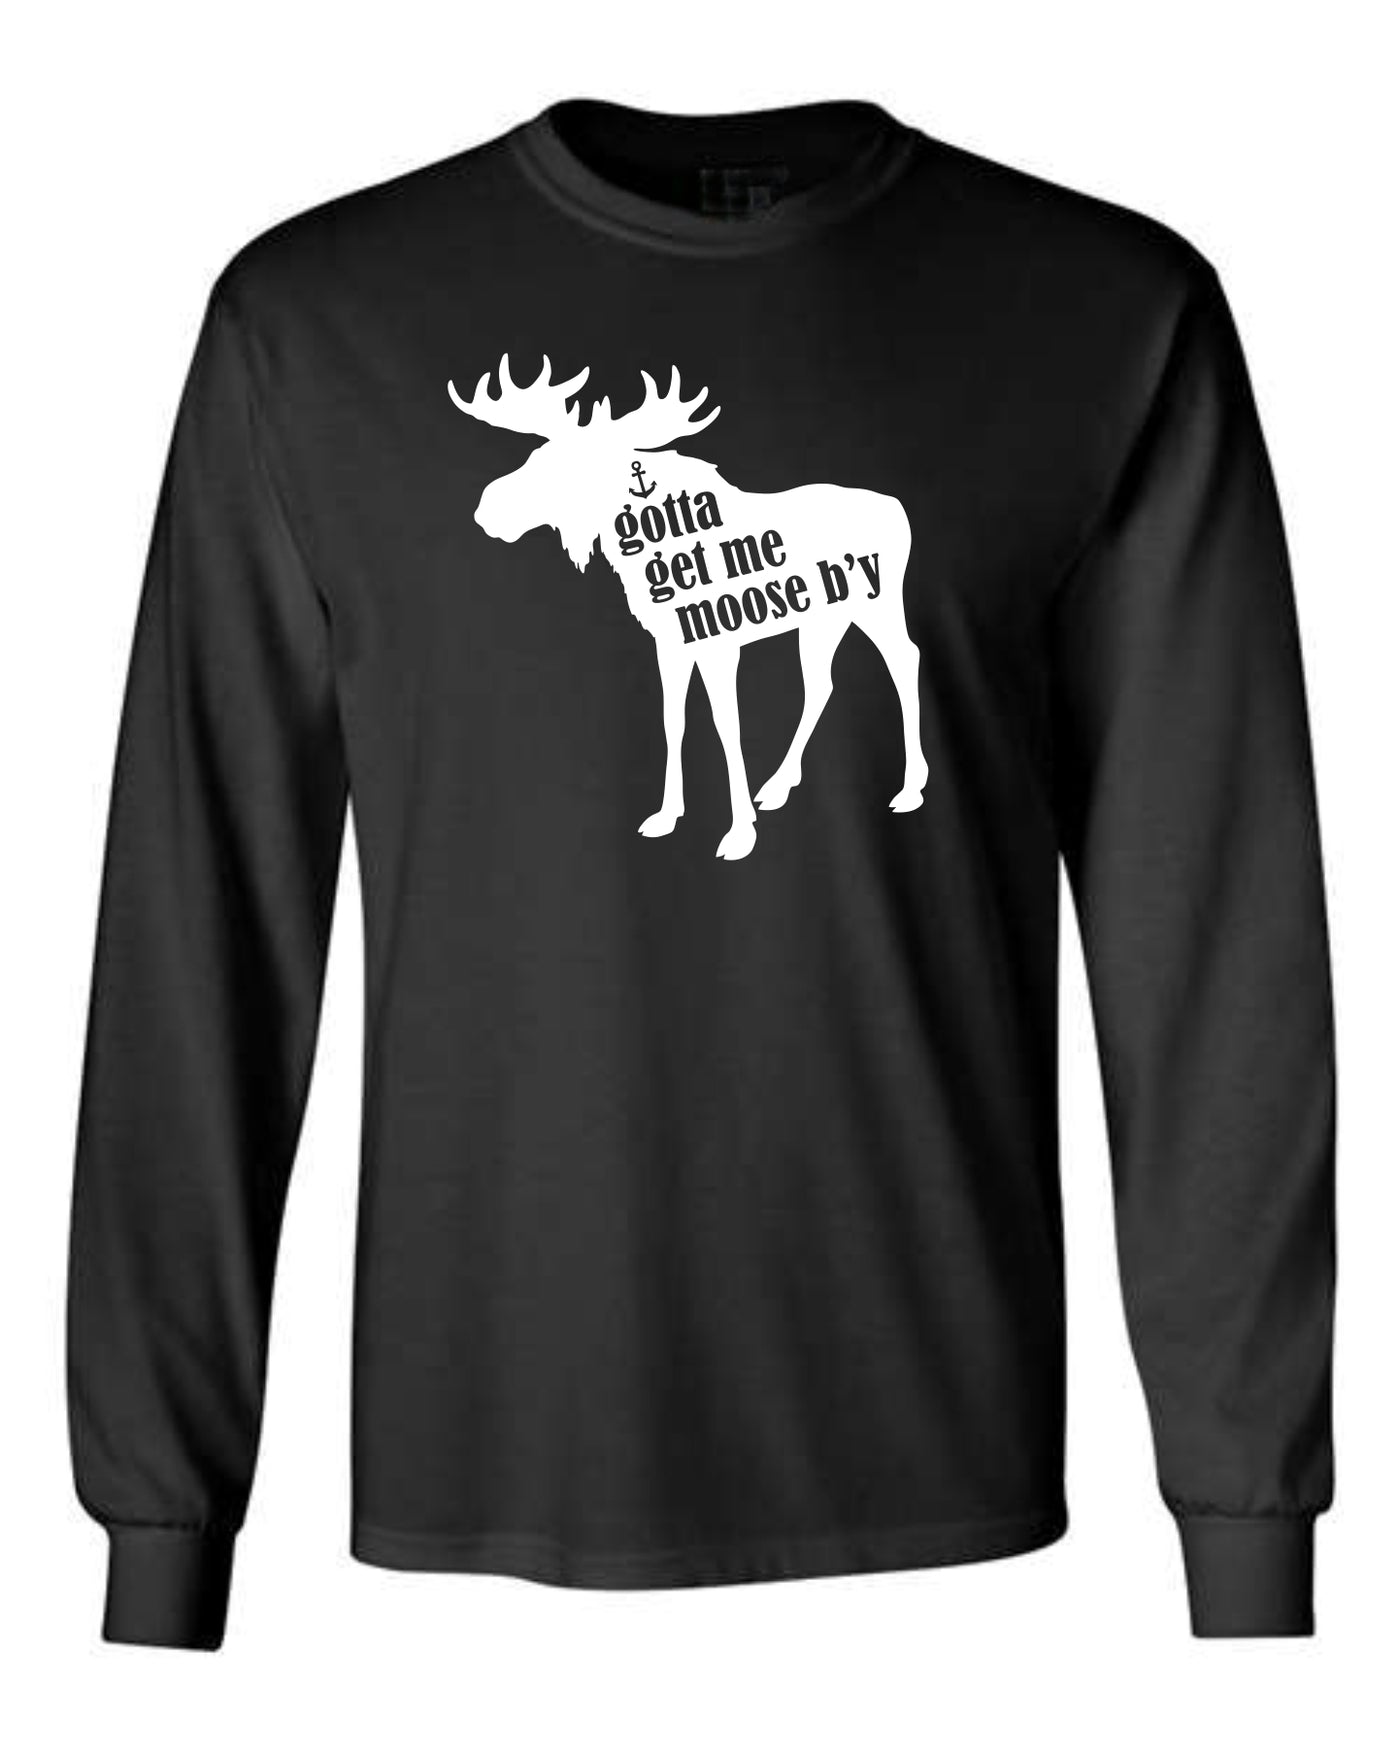 "Gotta Get Me Moose B'y" Unisex Long Sleeve T-shirt